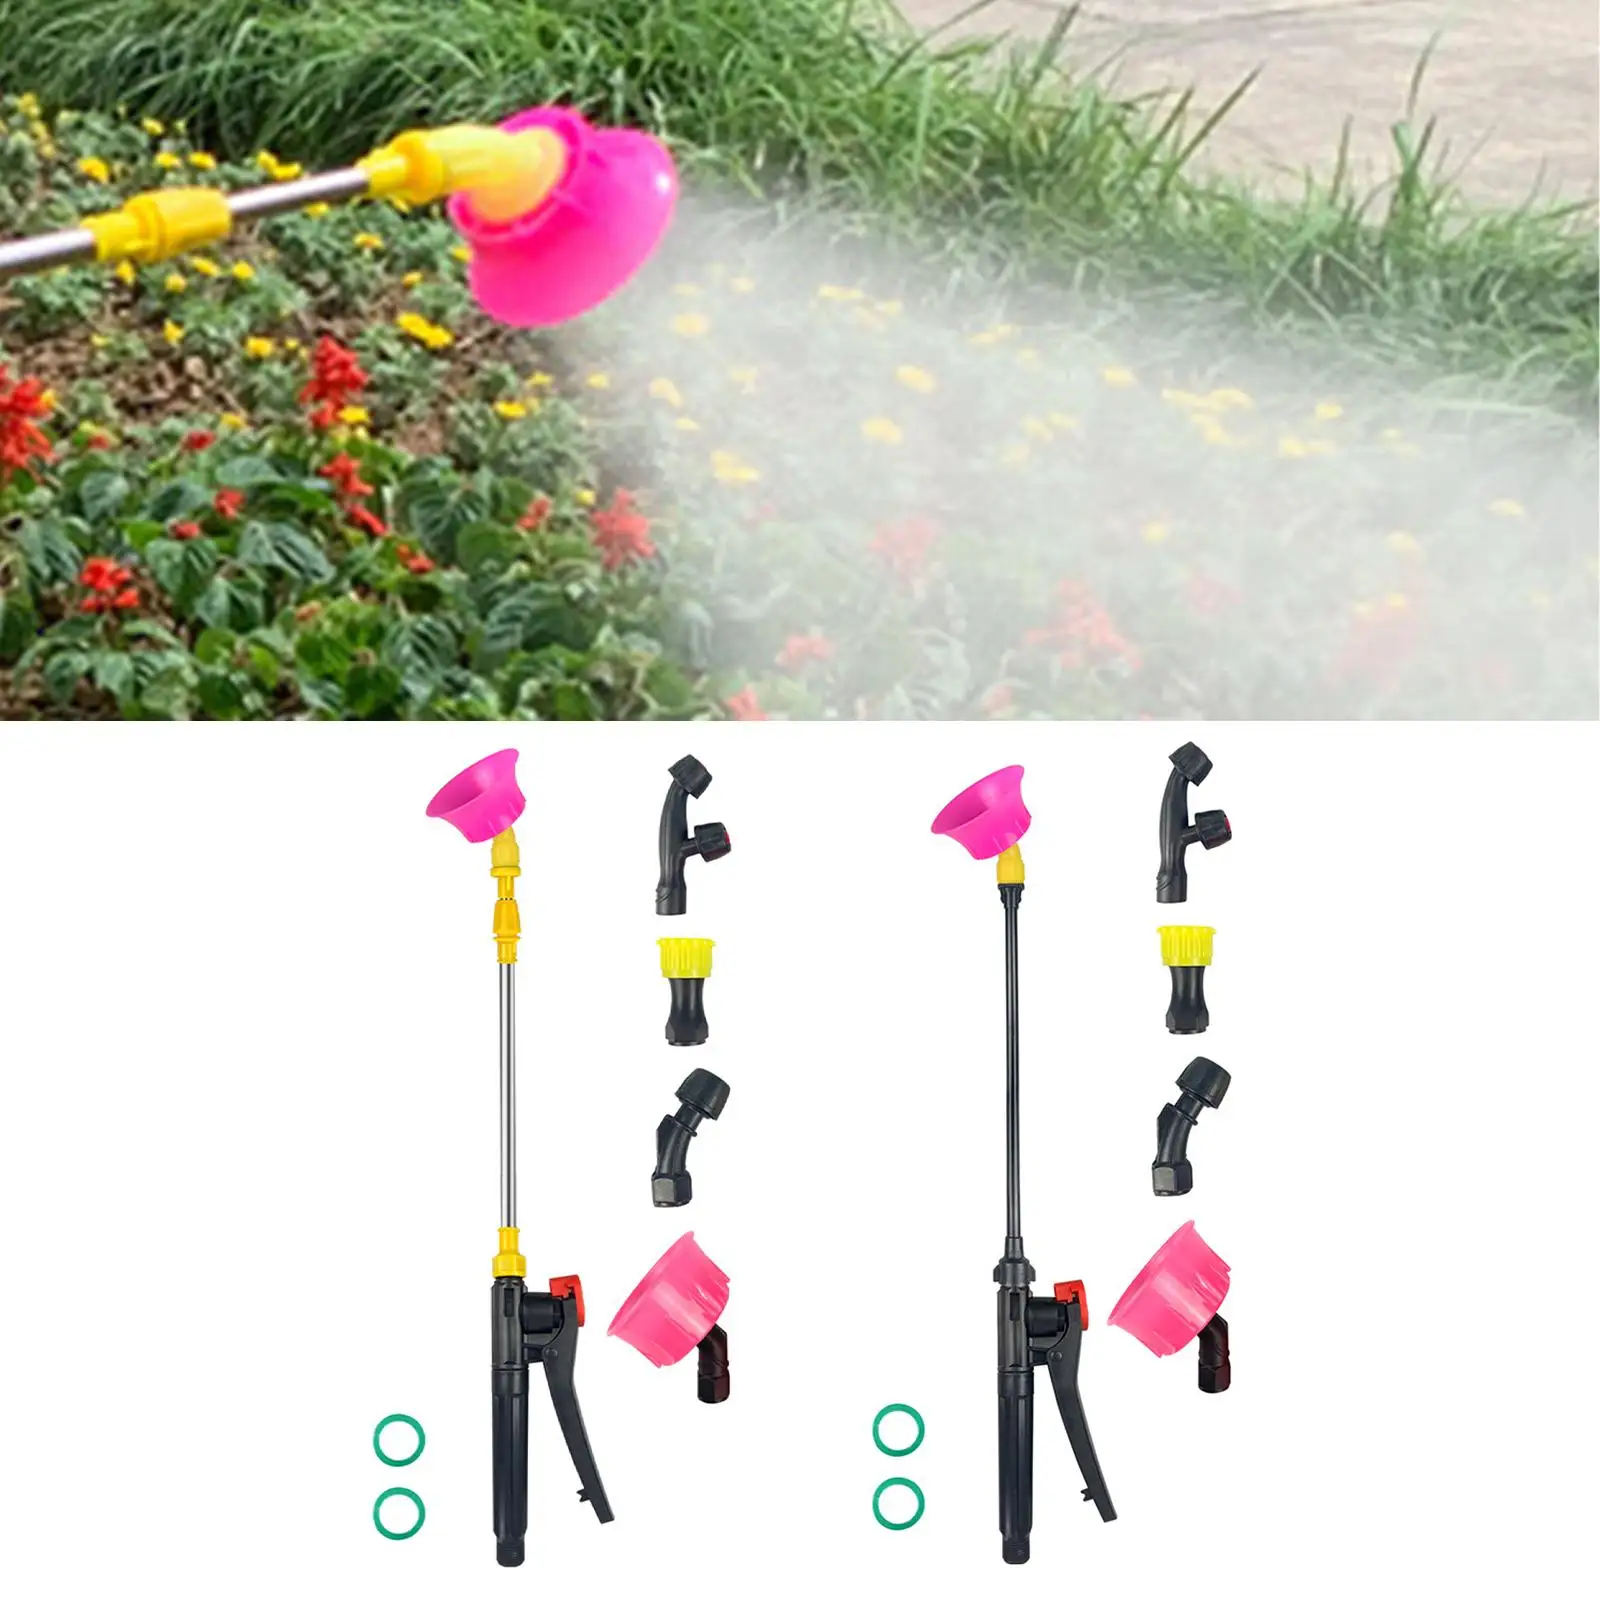 Sprayer Rod Ergonomic High Pressure Electric Sprayer Water Sprayer Wand for Outdoor Watering Hanging Plants Shrubs Garden